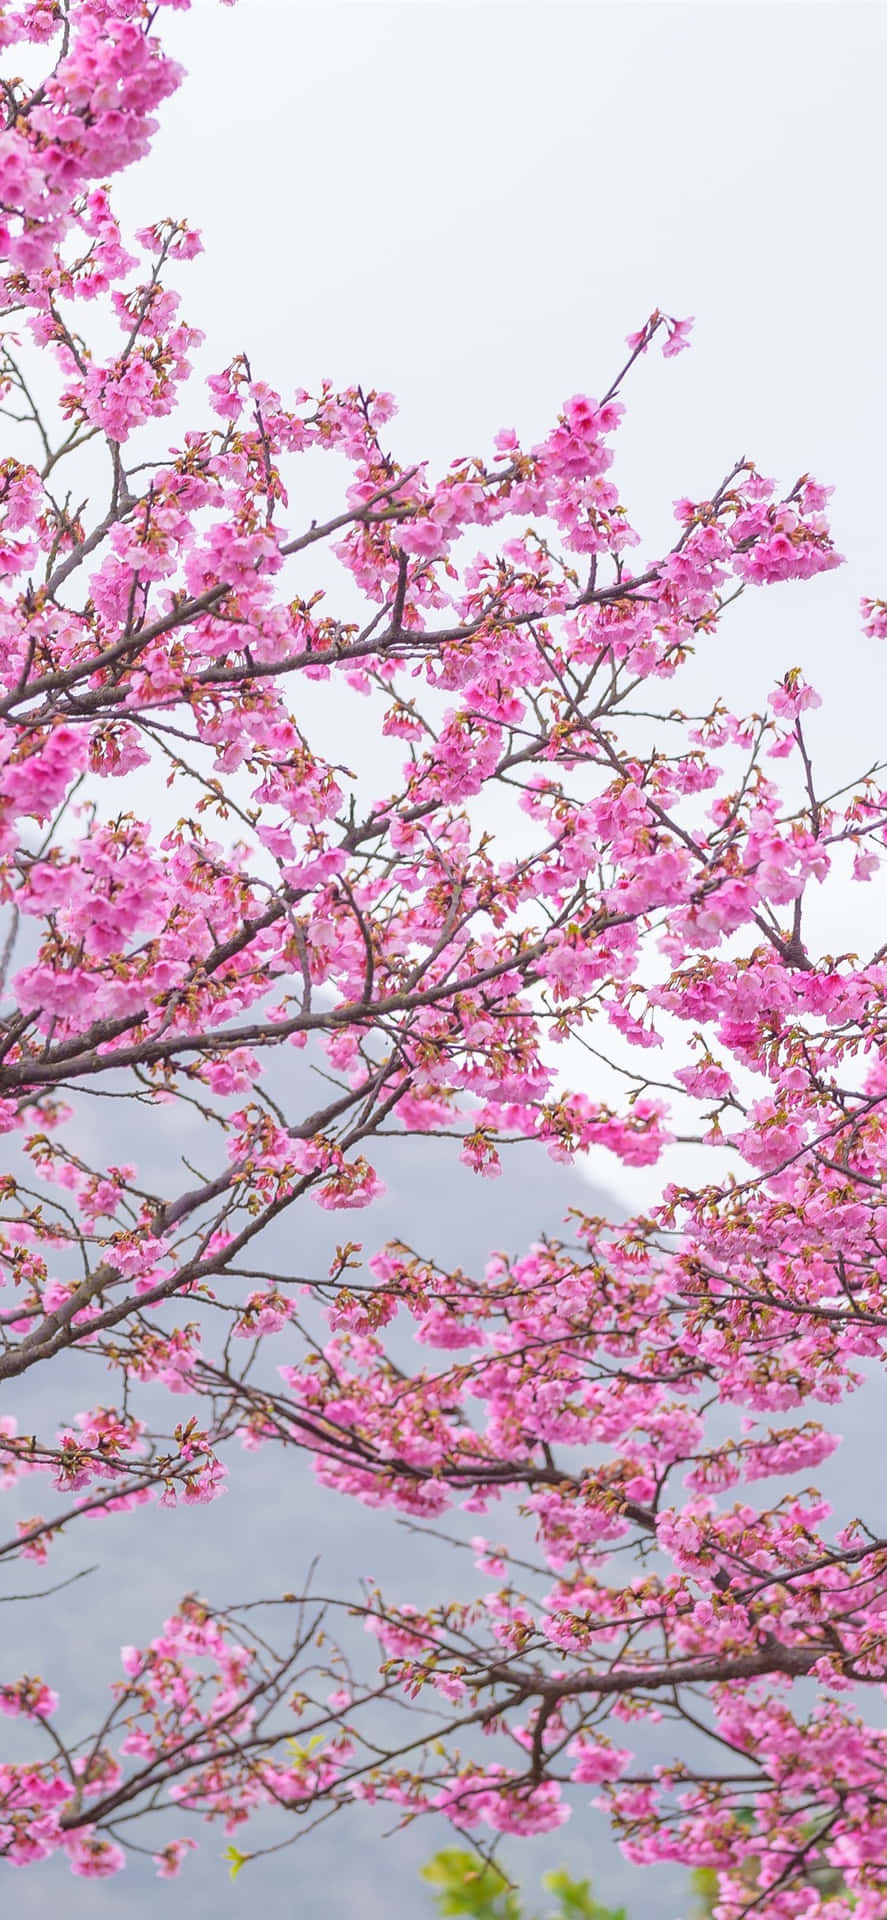 GREAT ART Large Photo Wallpaper – Cherry Blossom Tree – Picture Decorative  Spring Landscape Avenue Cherry Blossoms Sakura Bloom Flowers Image Decor  Wall Mural (132.3x93.7in - 336x238cm) - Amazon.com